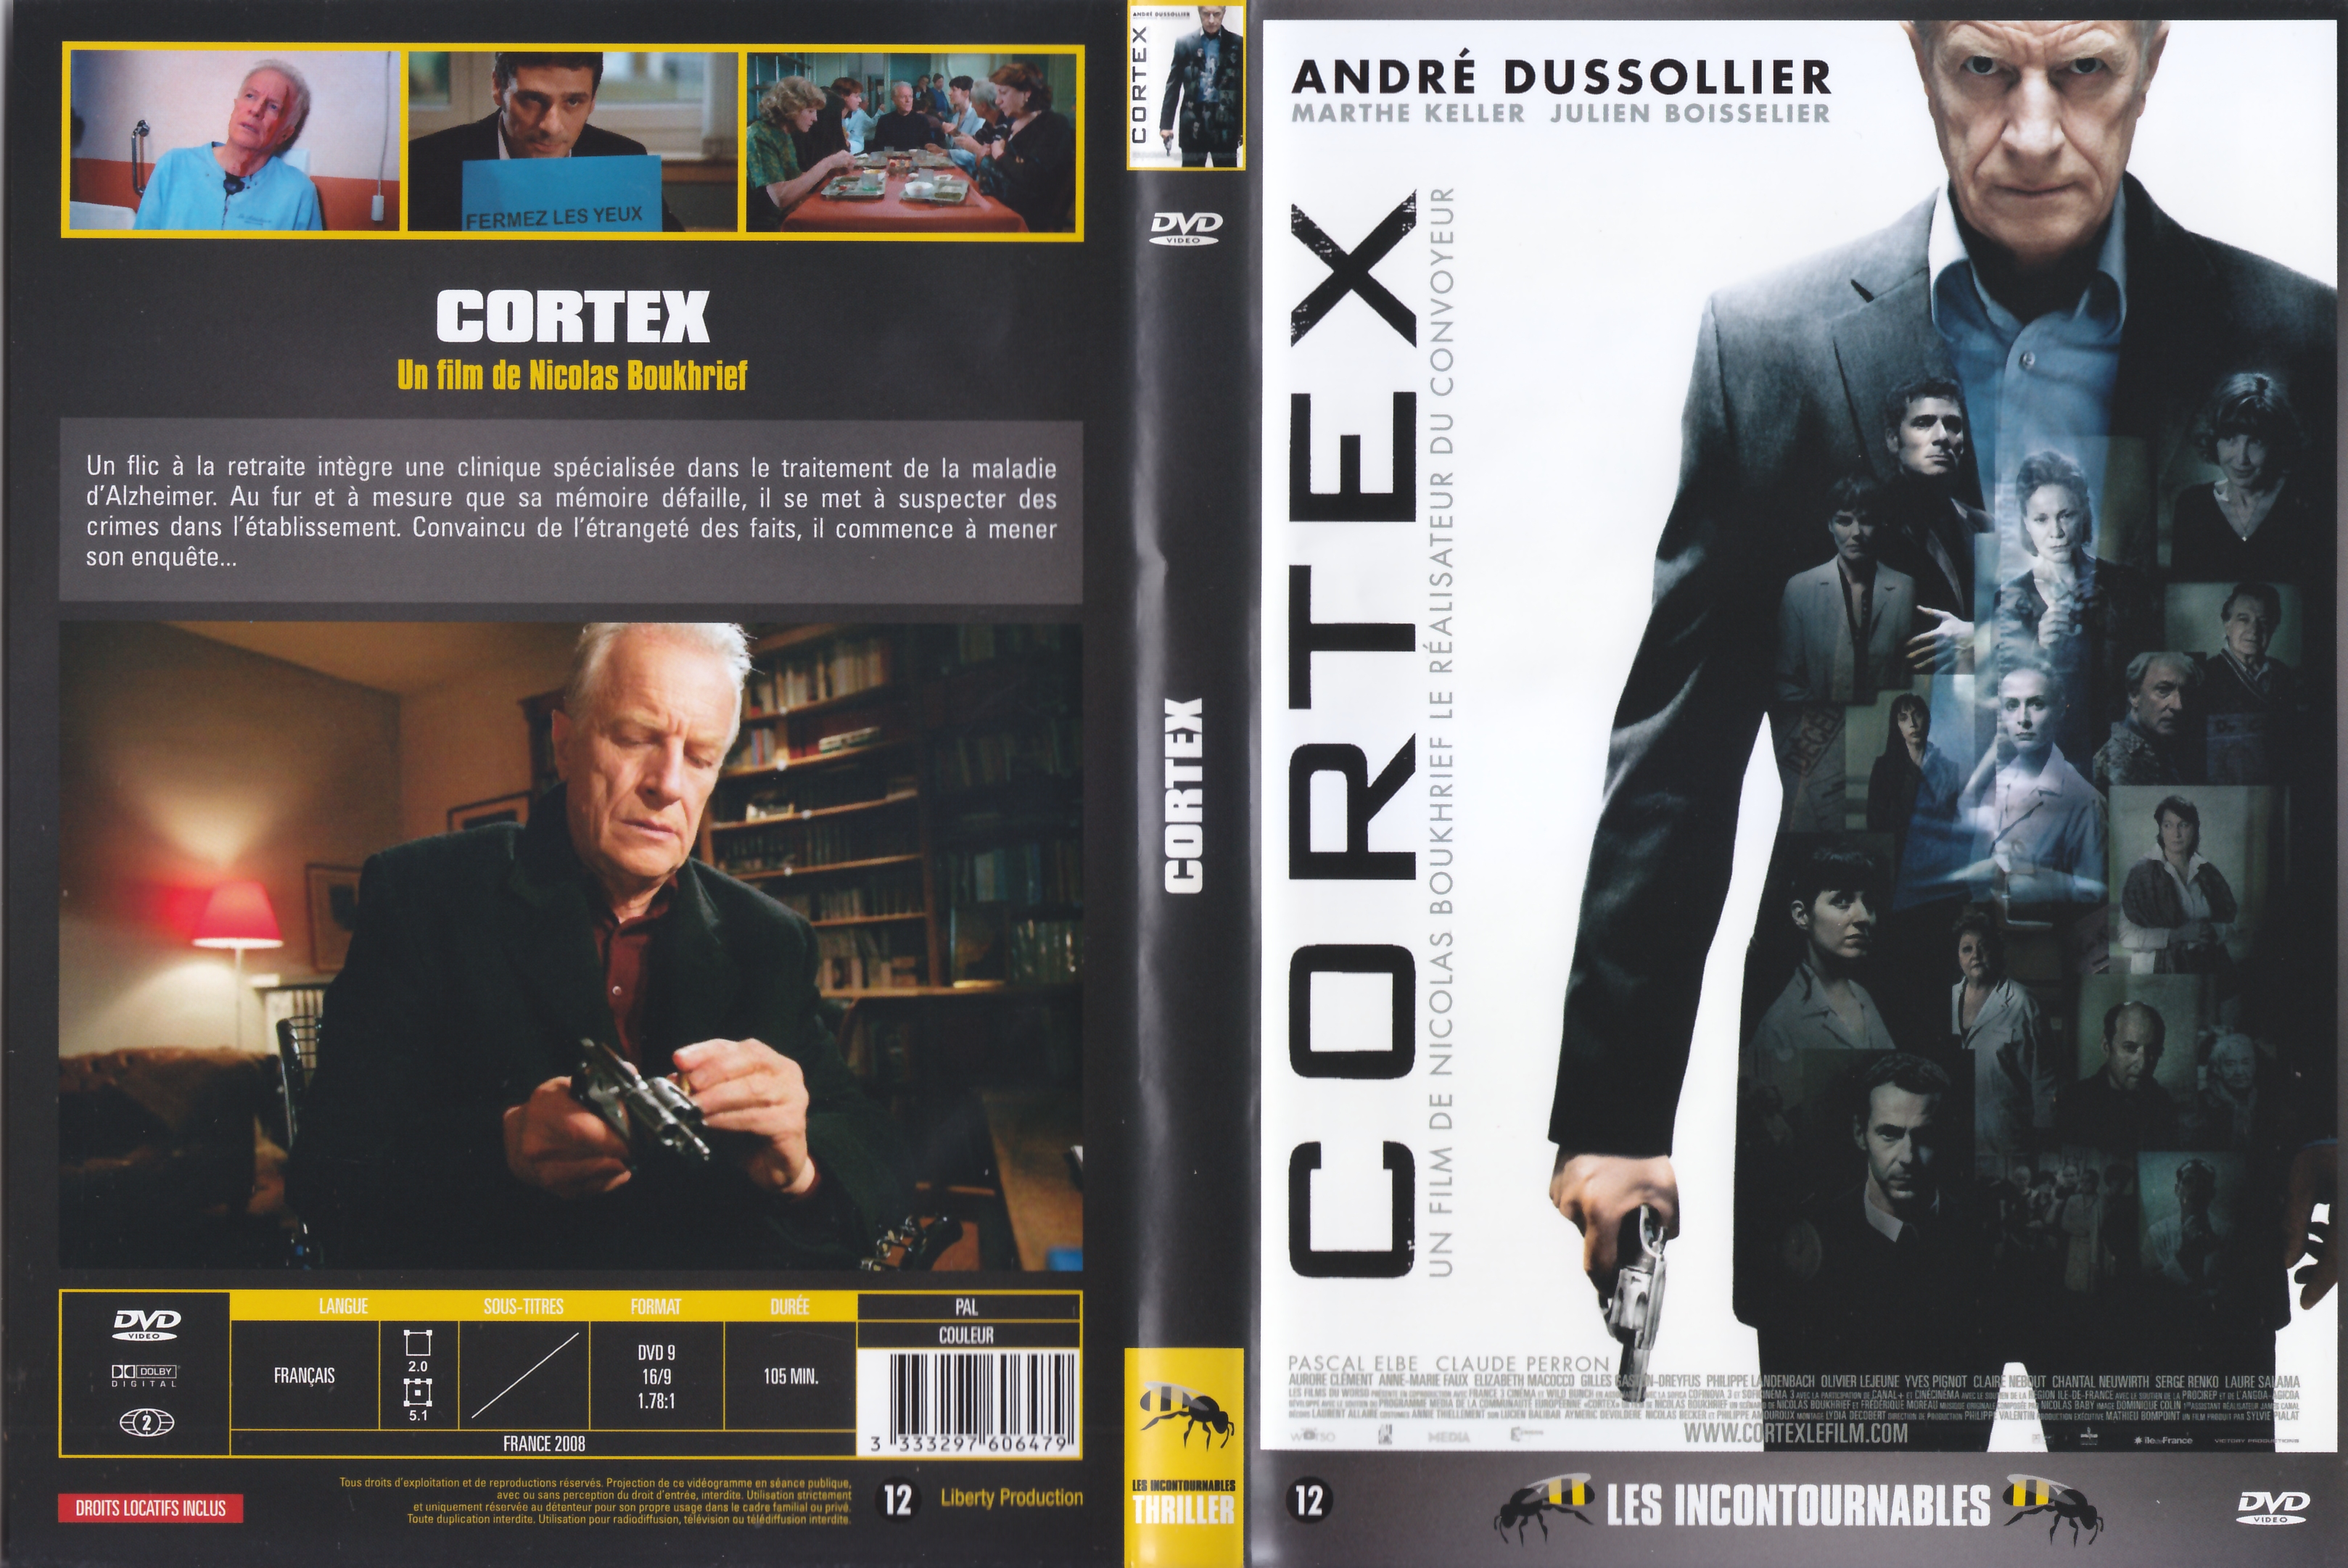 Jaquette DVD Cortex v3